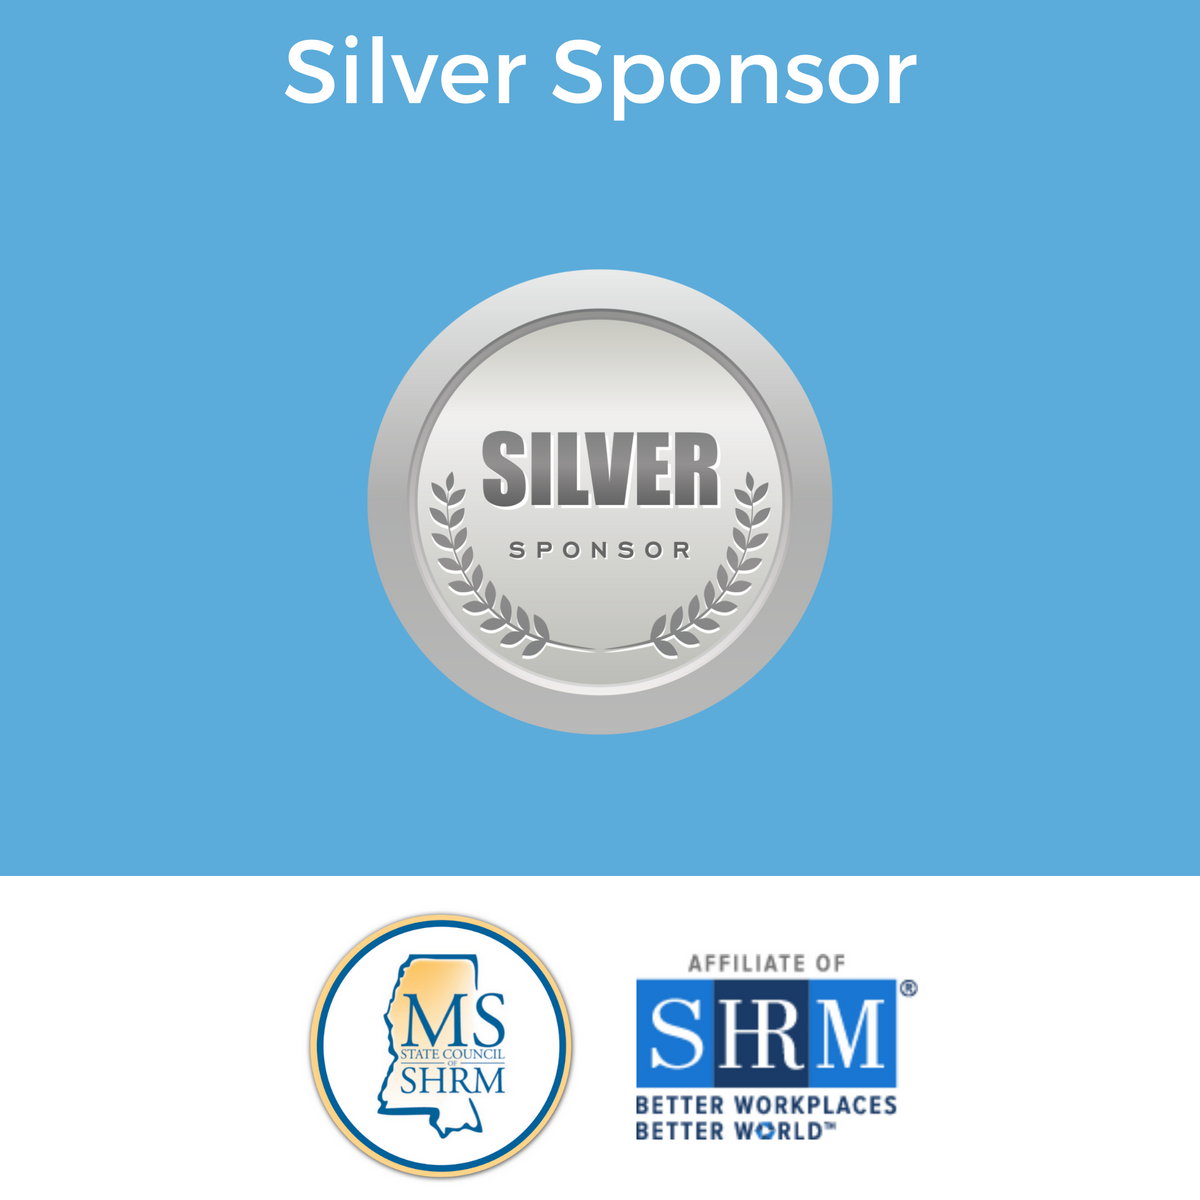 23 MS SHRM Annual - Silver Sponsor